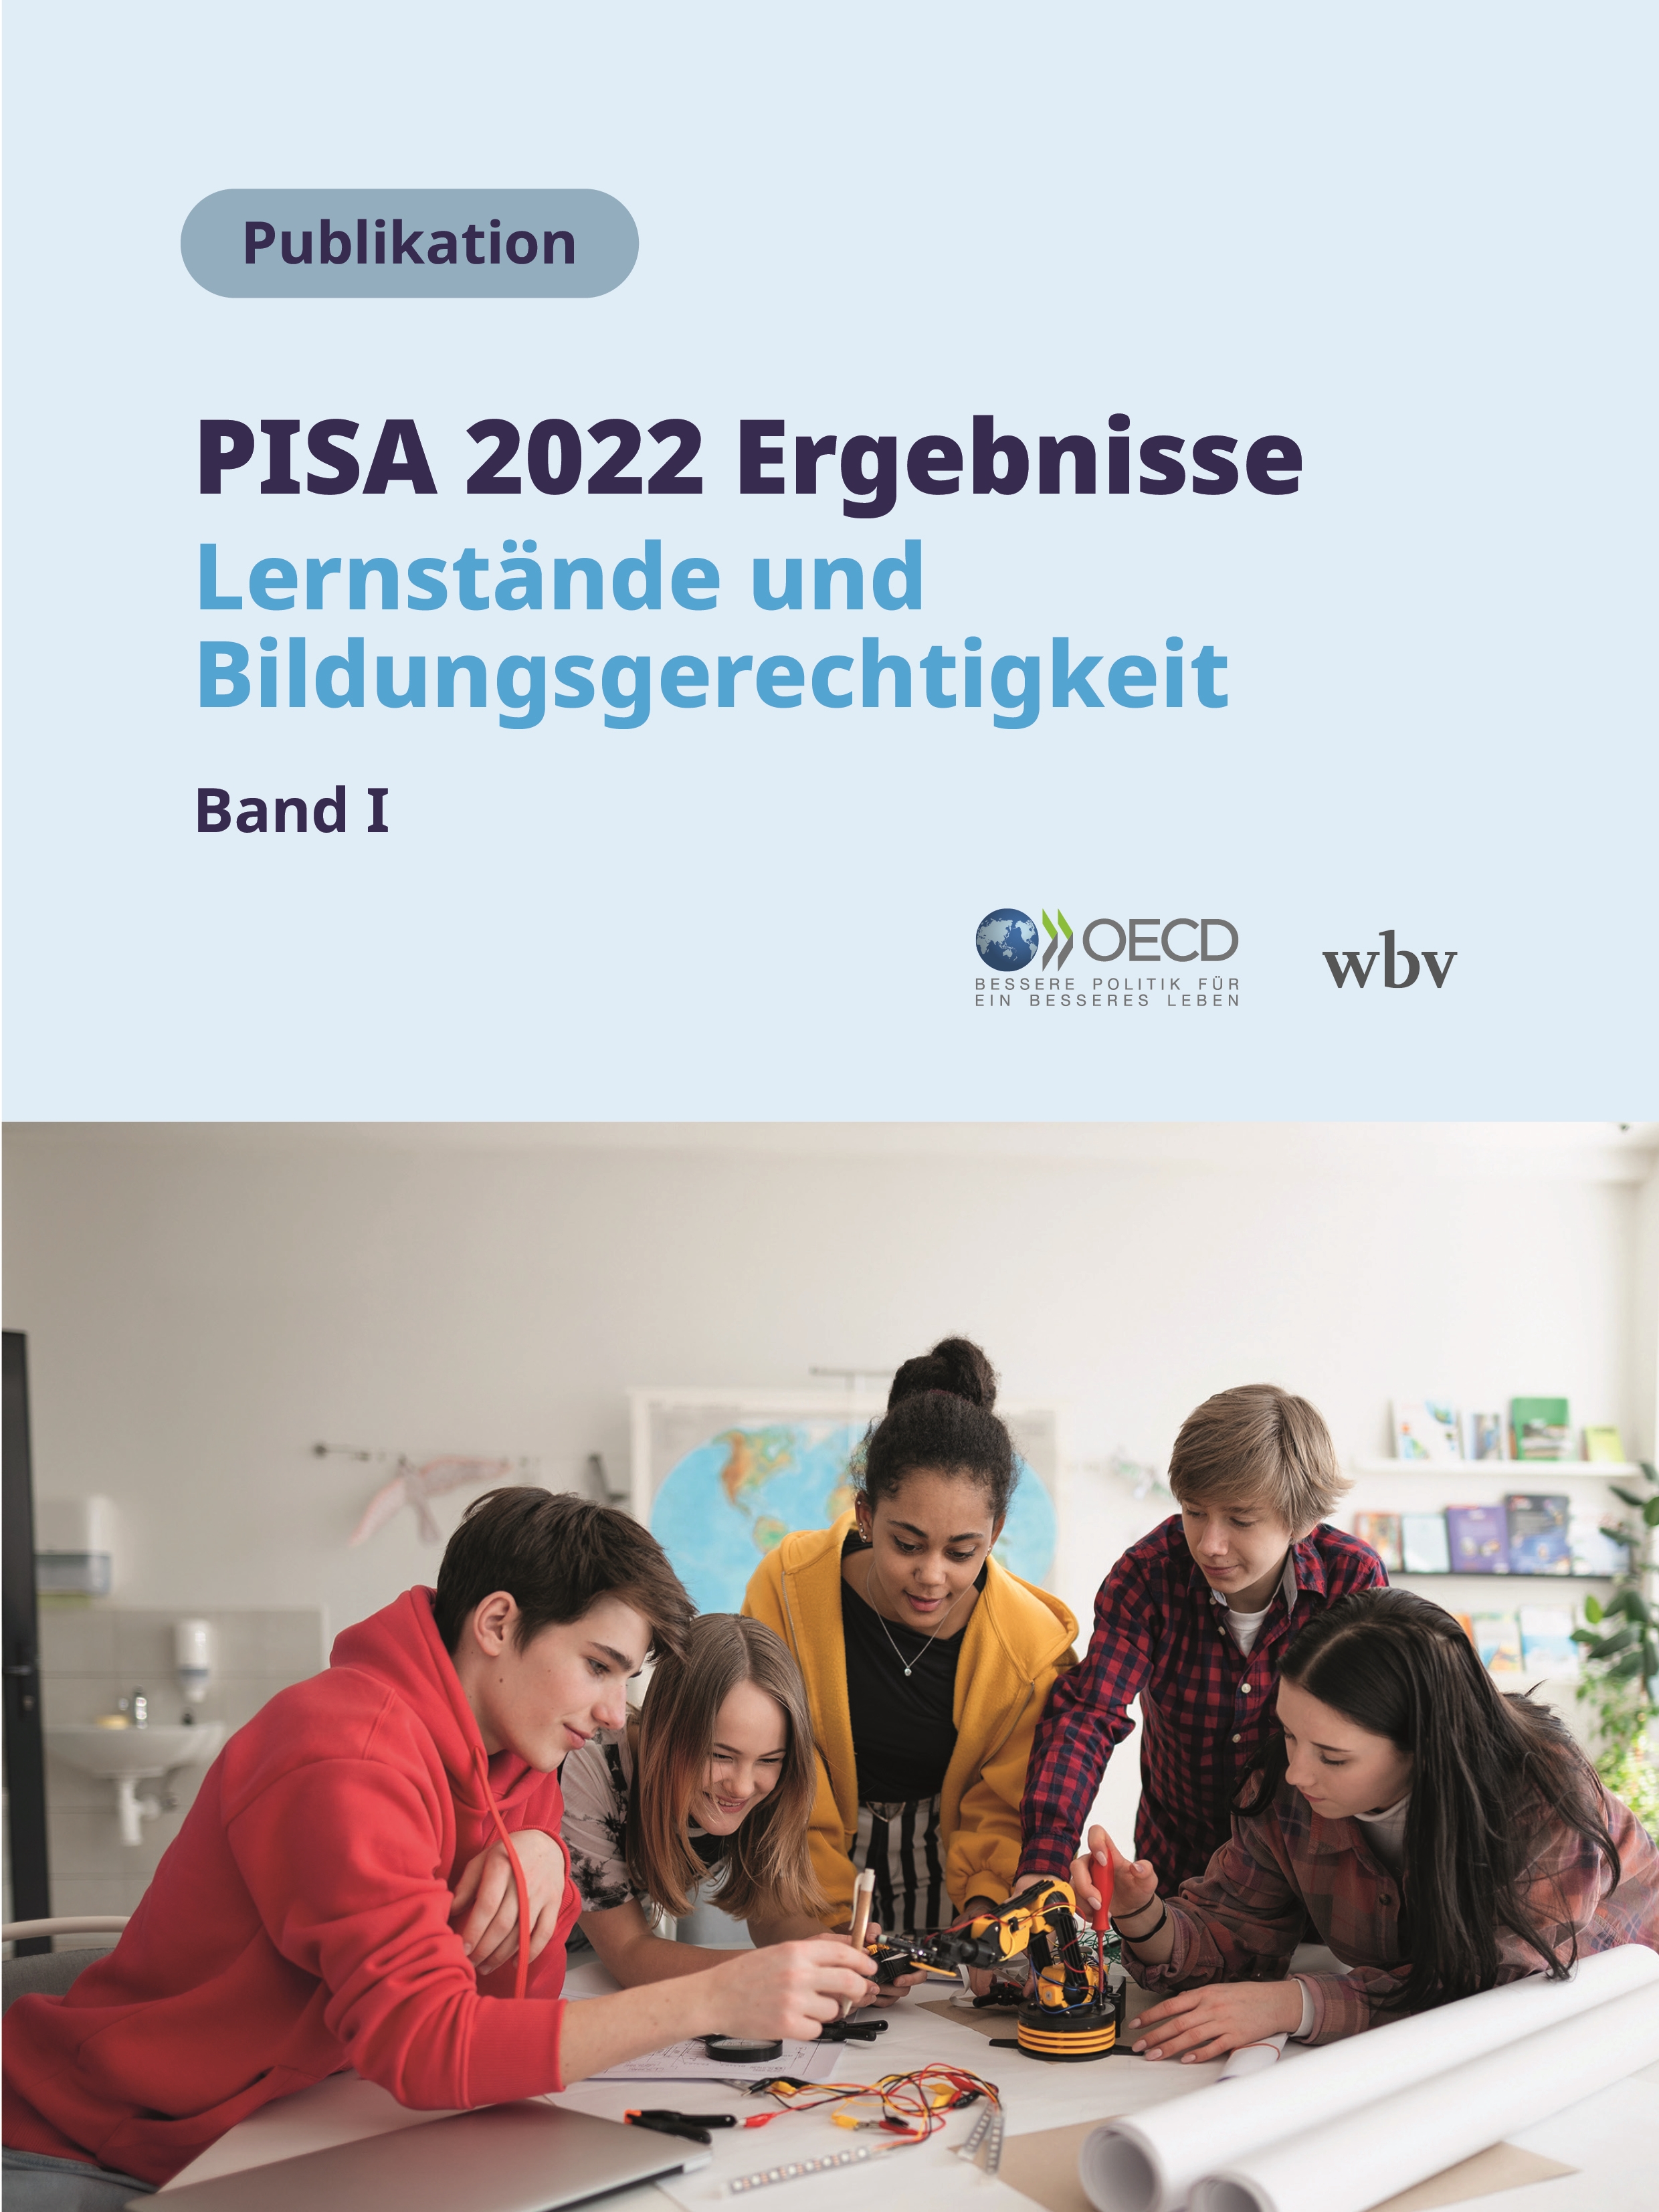 PISA 2022 Ergebnisse (Band I)